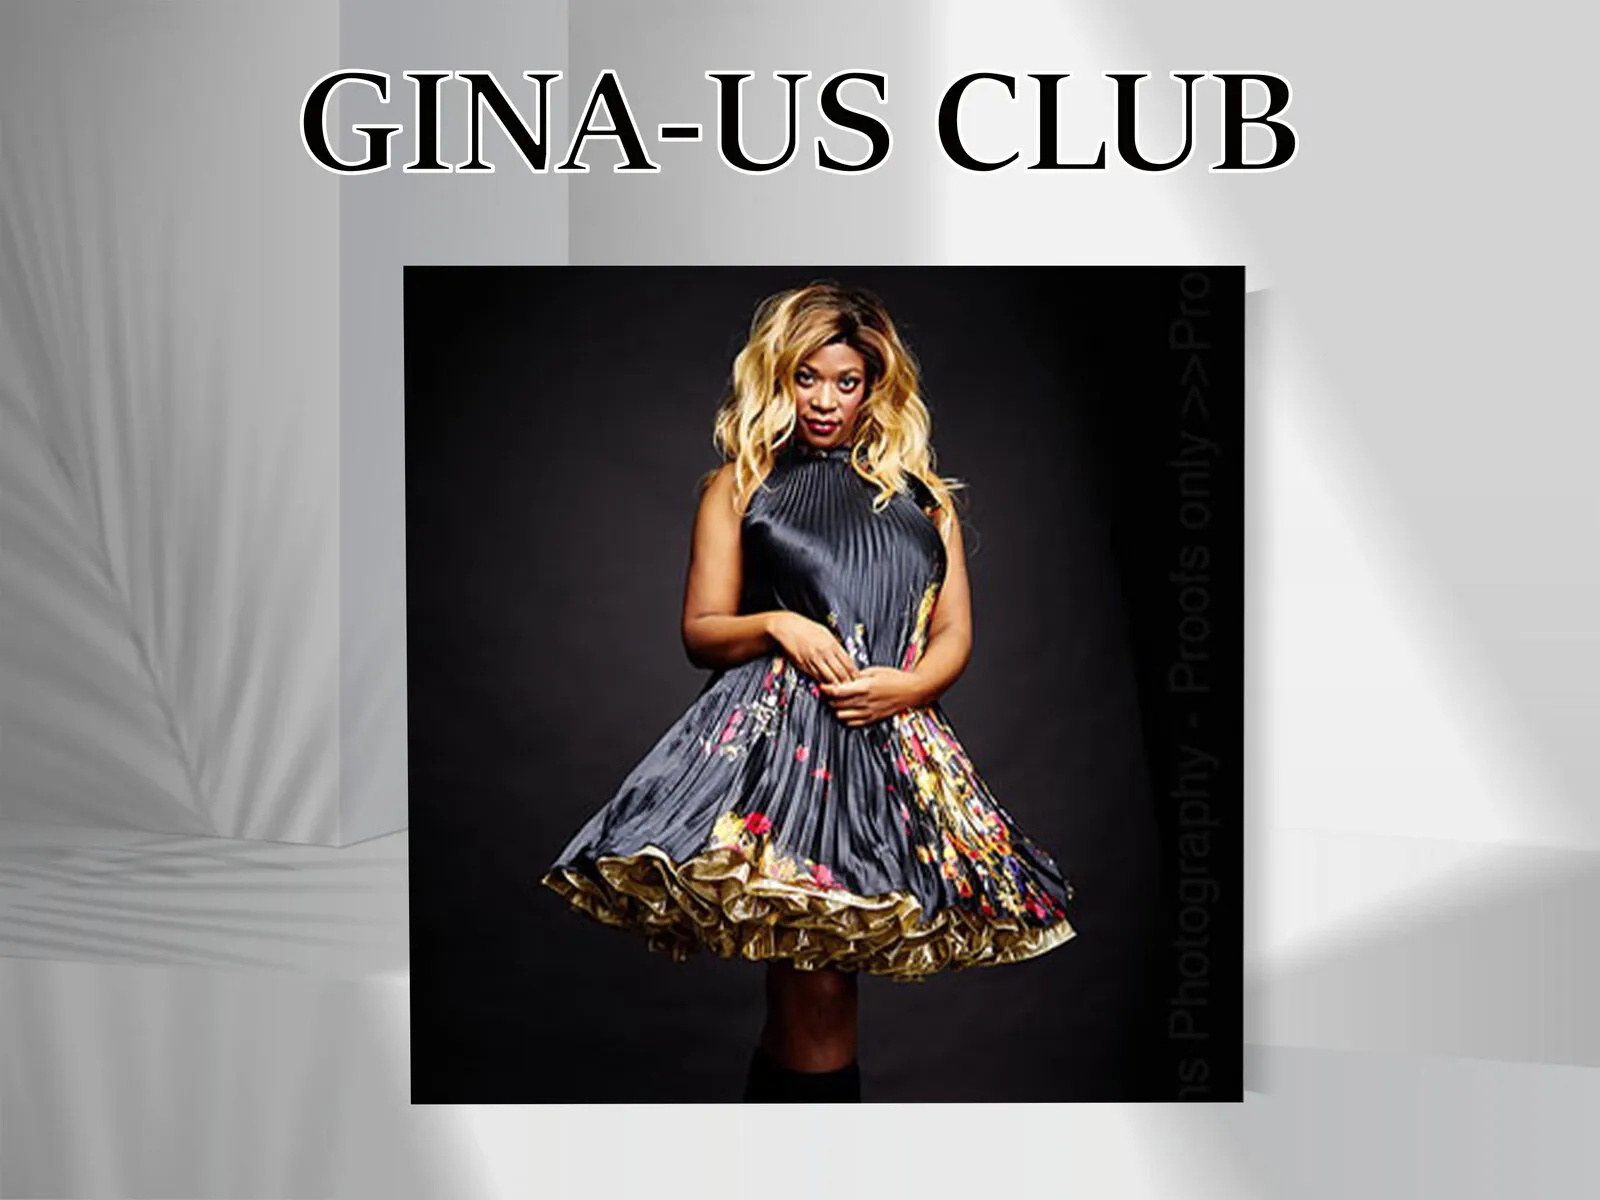 The GINA-US Club